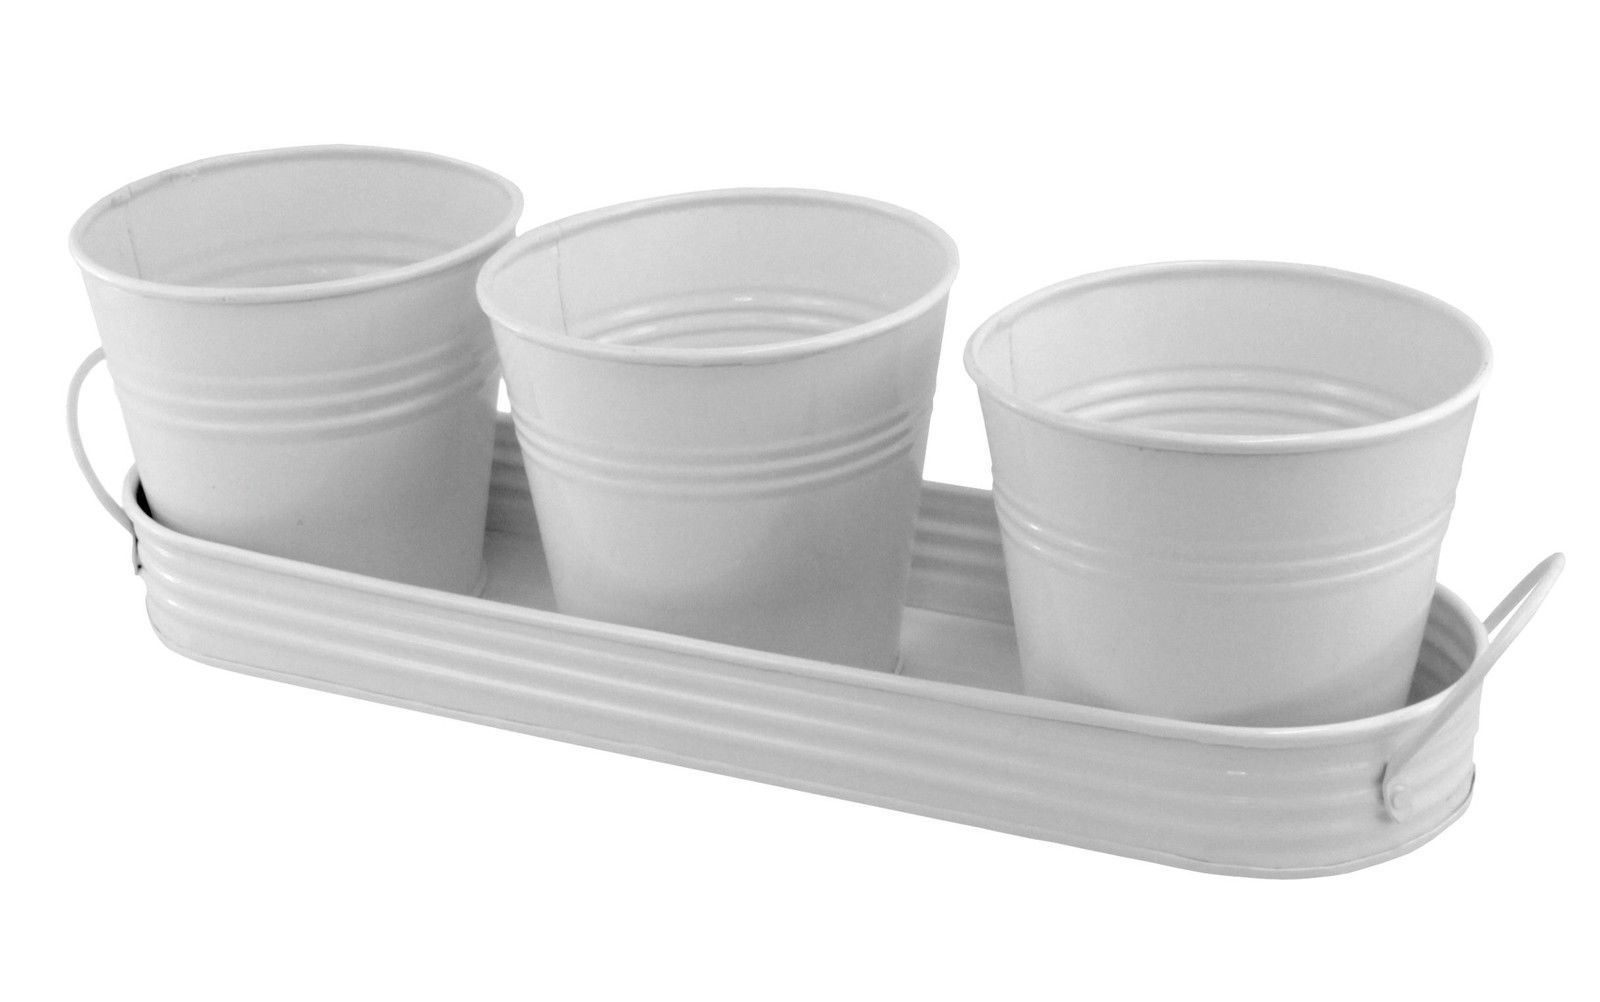 PLAID 3 Metal Planting Pots In Tray - White -   24 white garden pots
 ideas